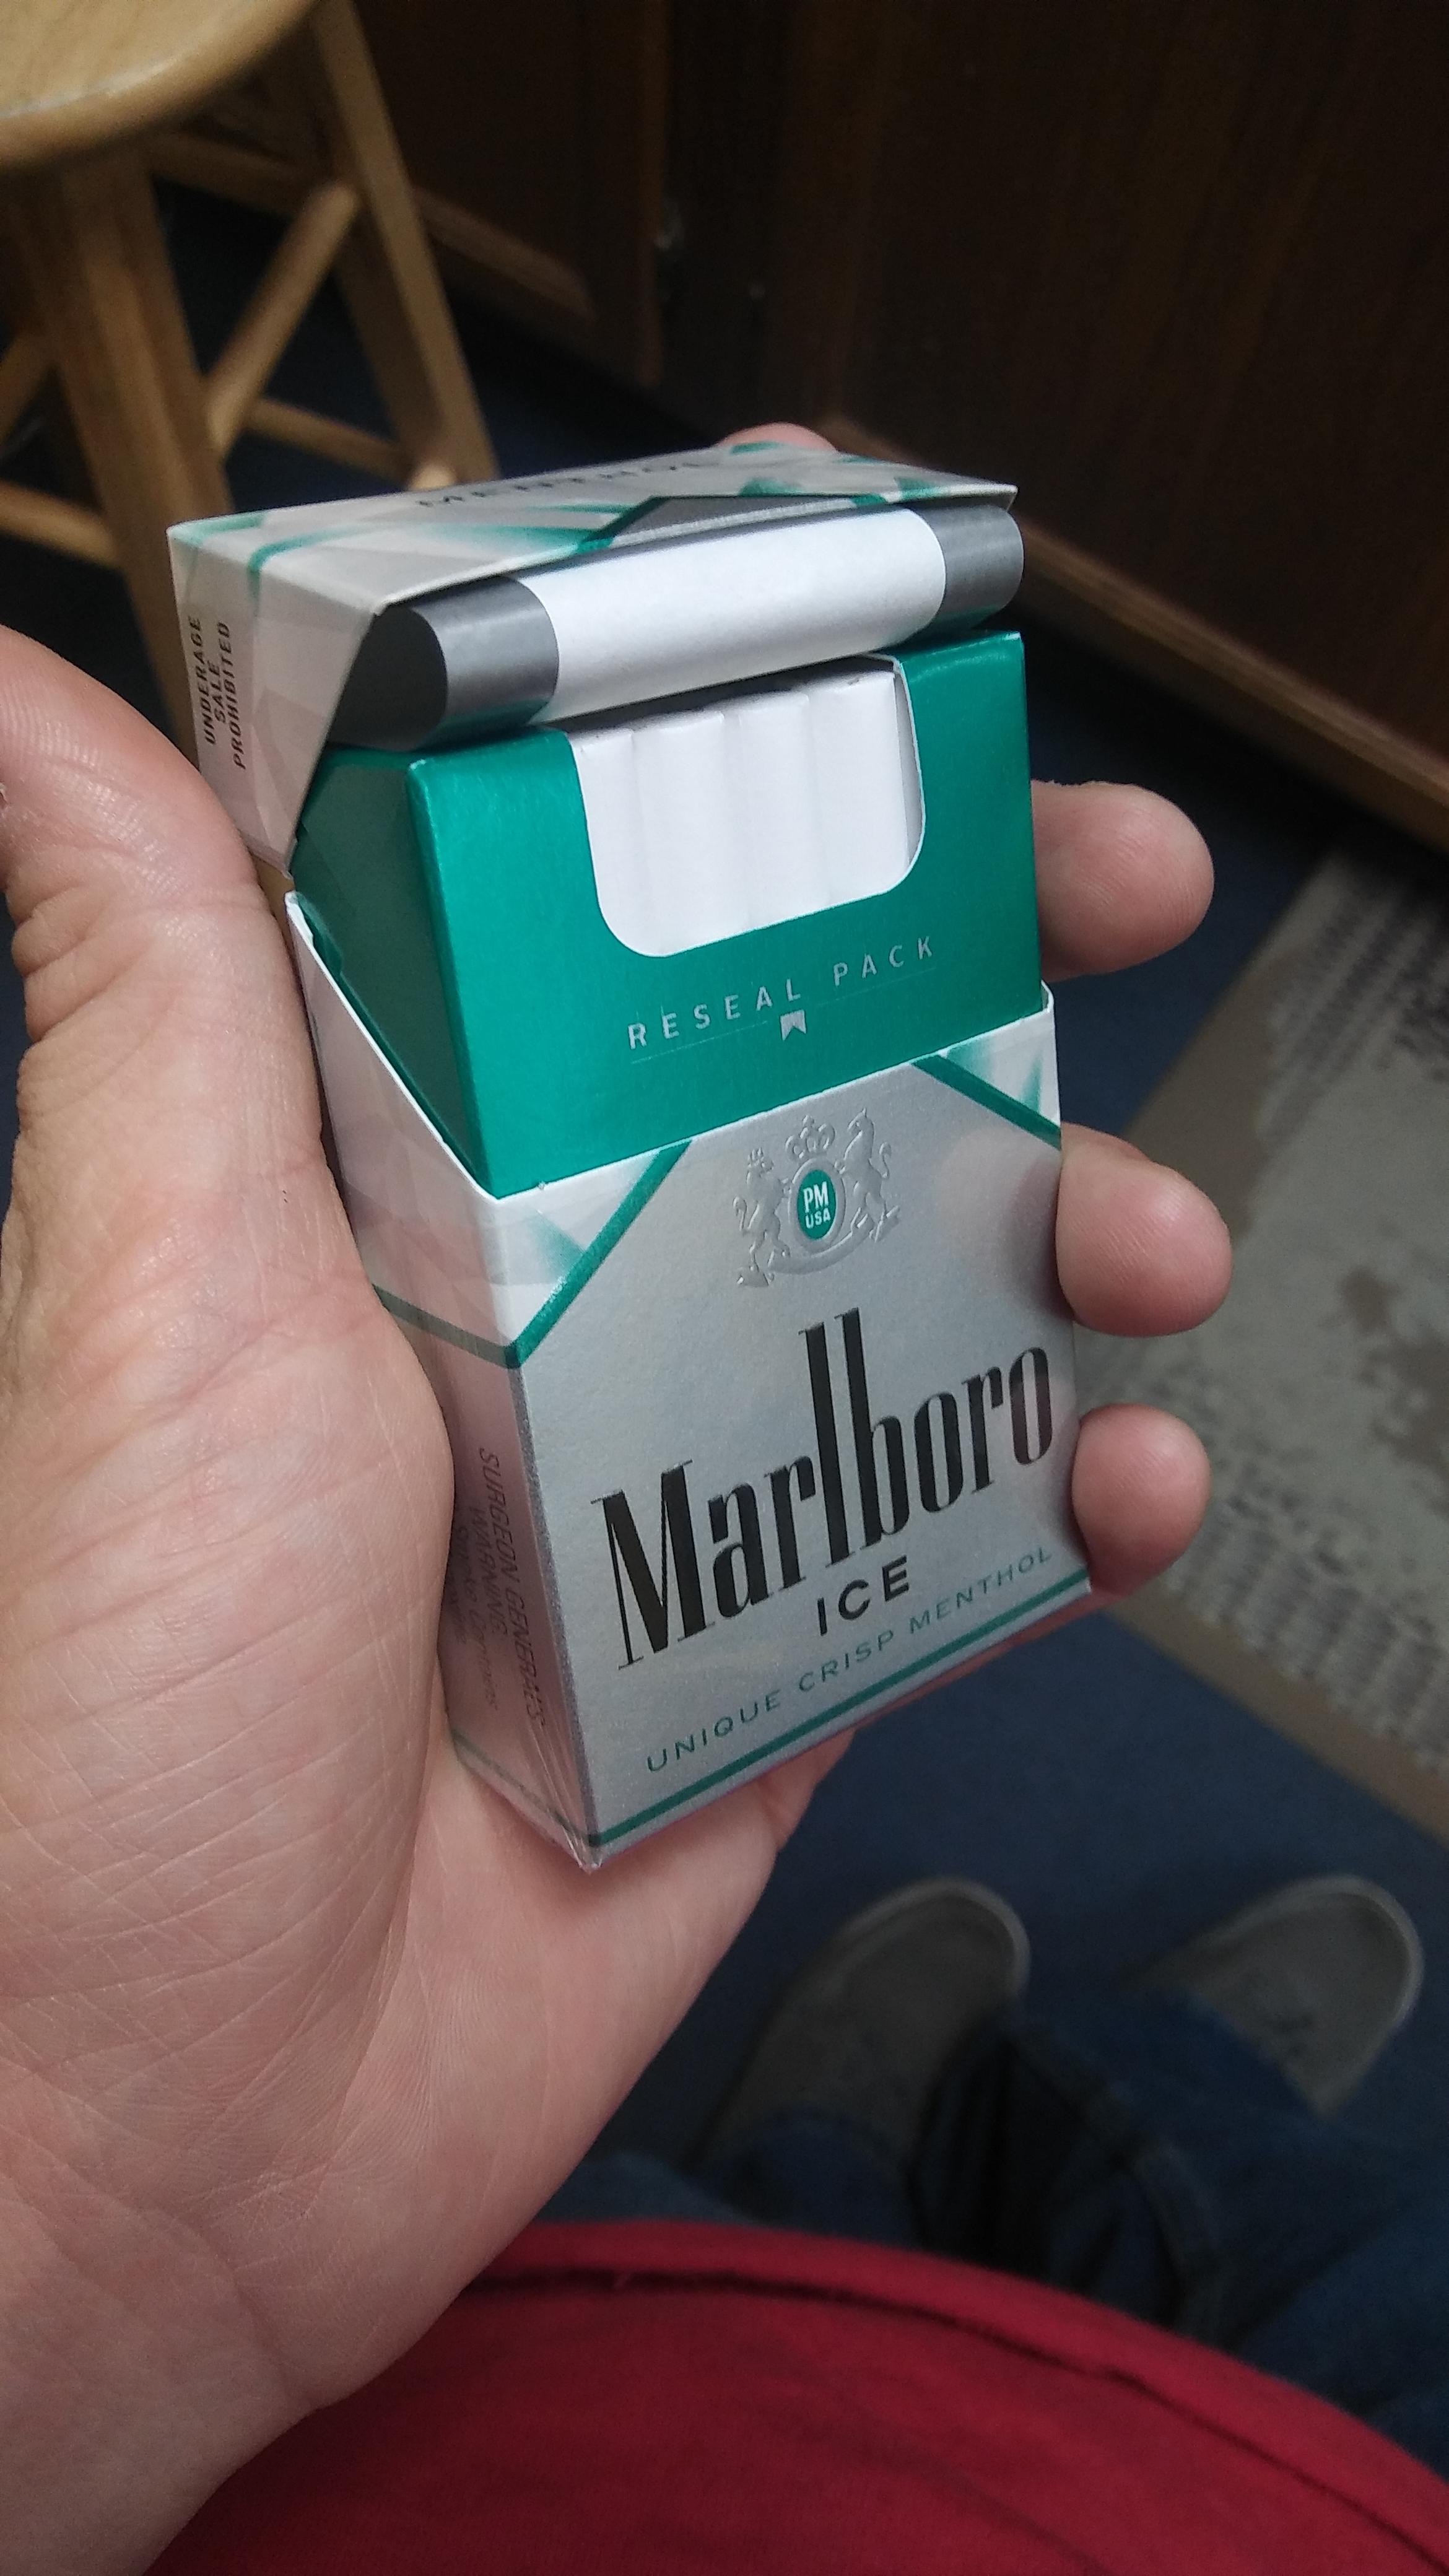 Marlboro ice reseal pack cigarettes 10 cartons - Click Image to Close